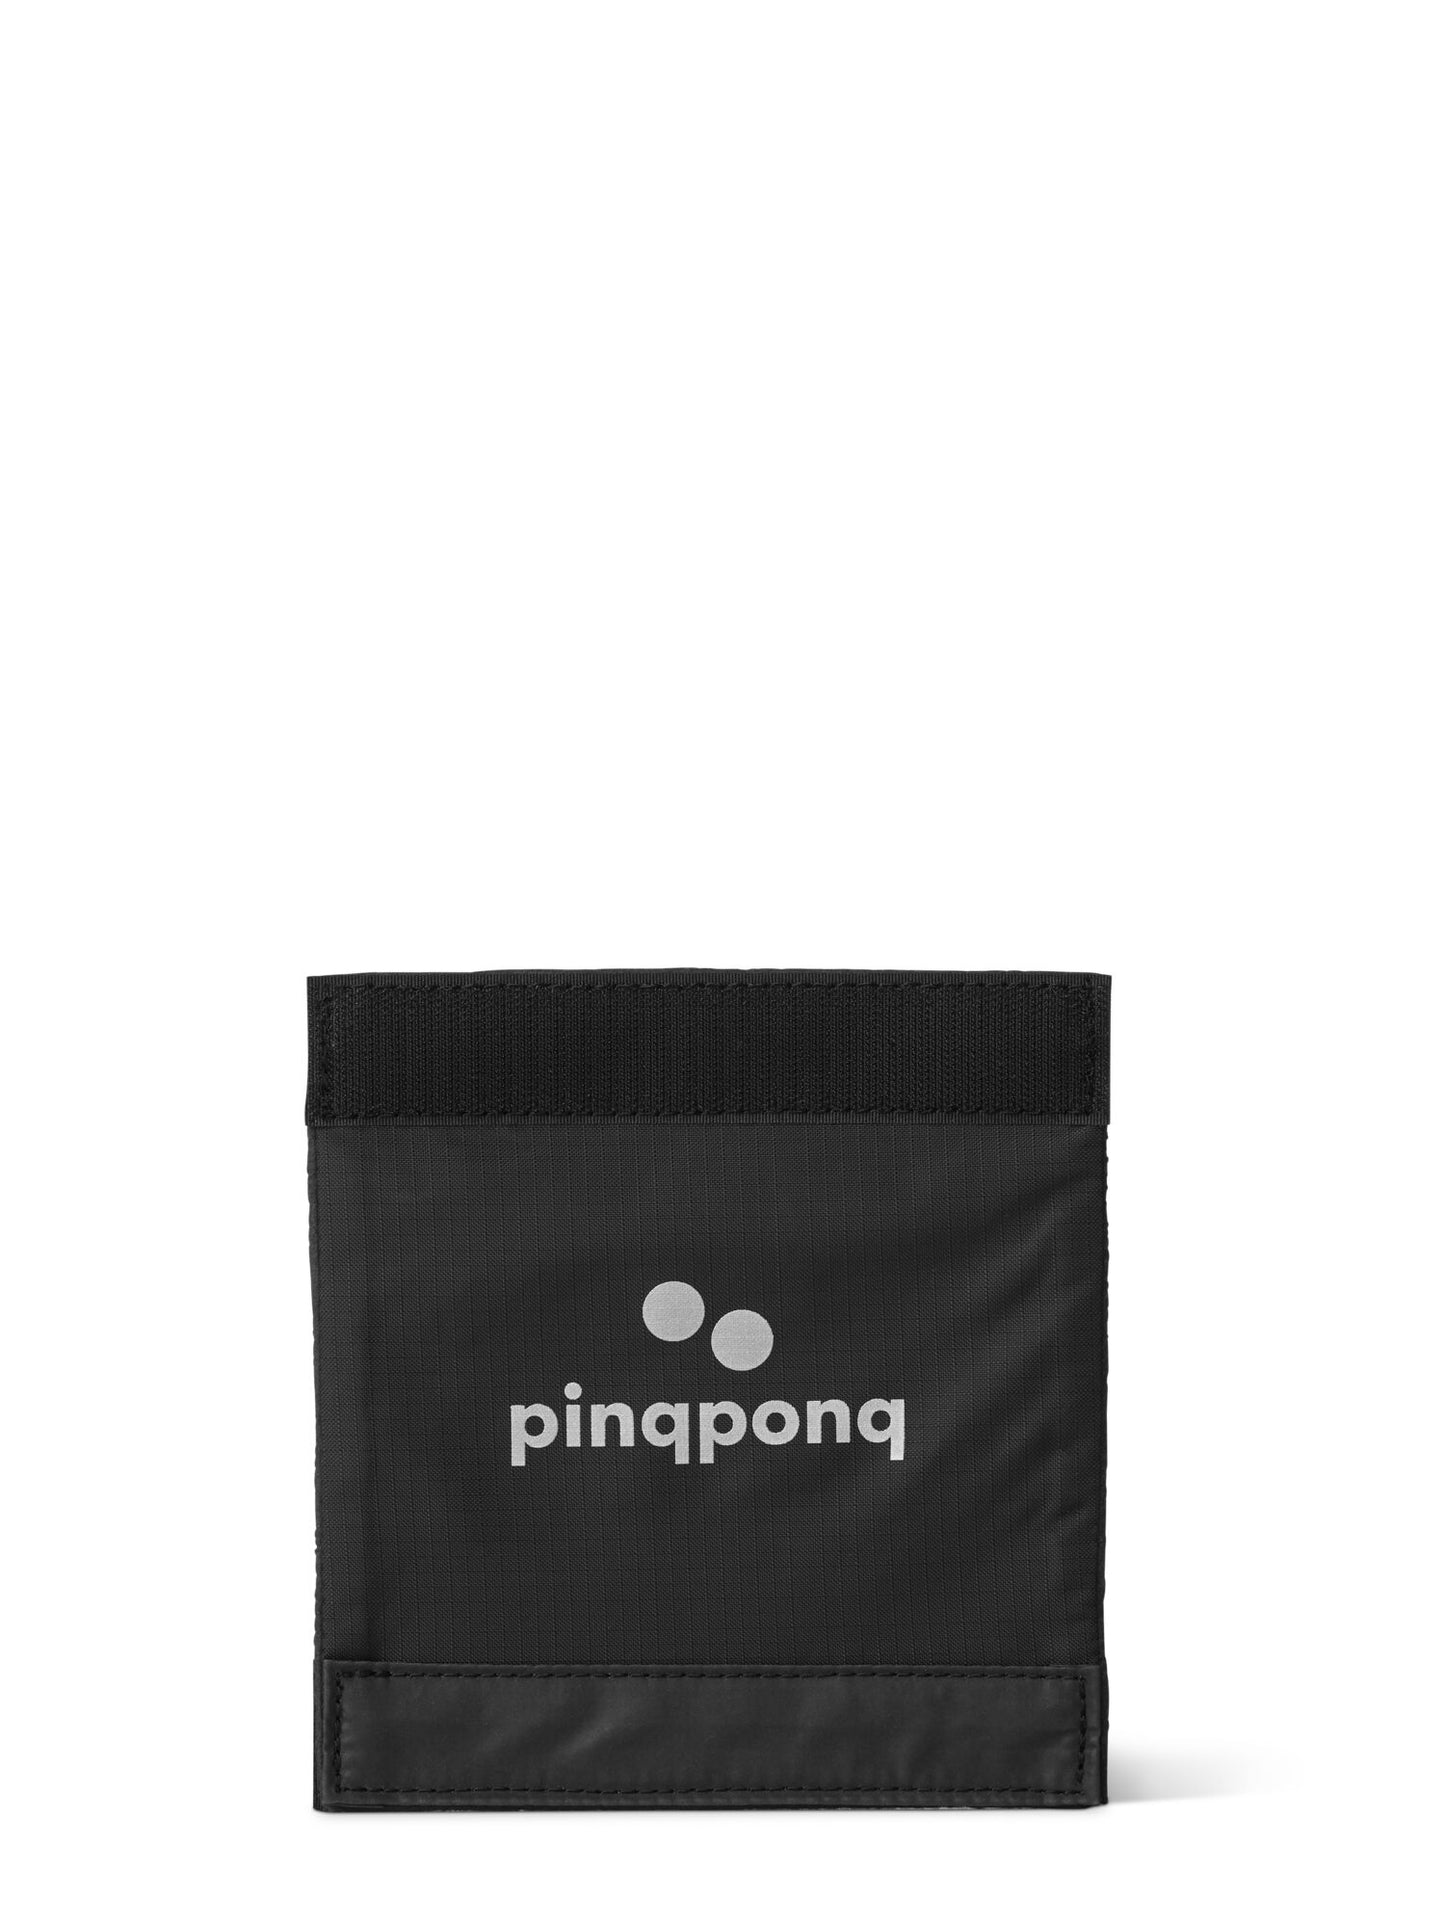 pinqponq-Dry-Cloth-front